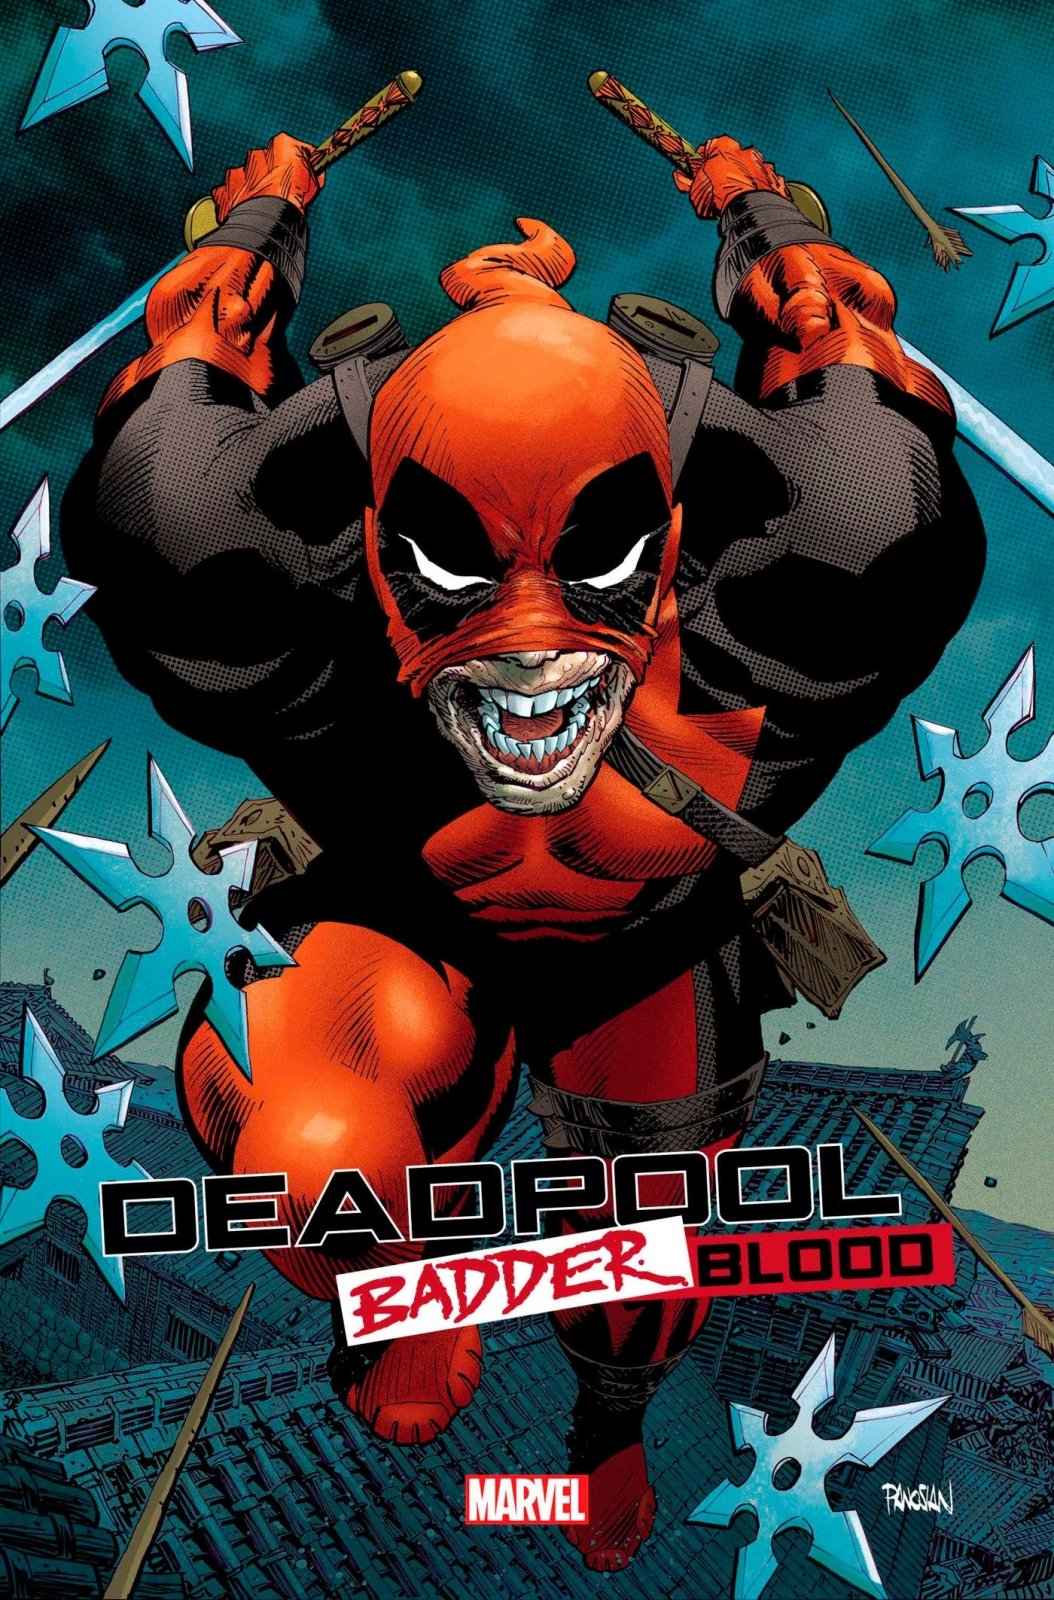 Deadpool: Badder Blood 1 Dan Panosian Variant - The Fourth Place